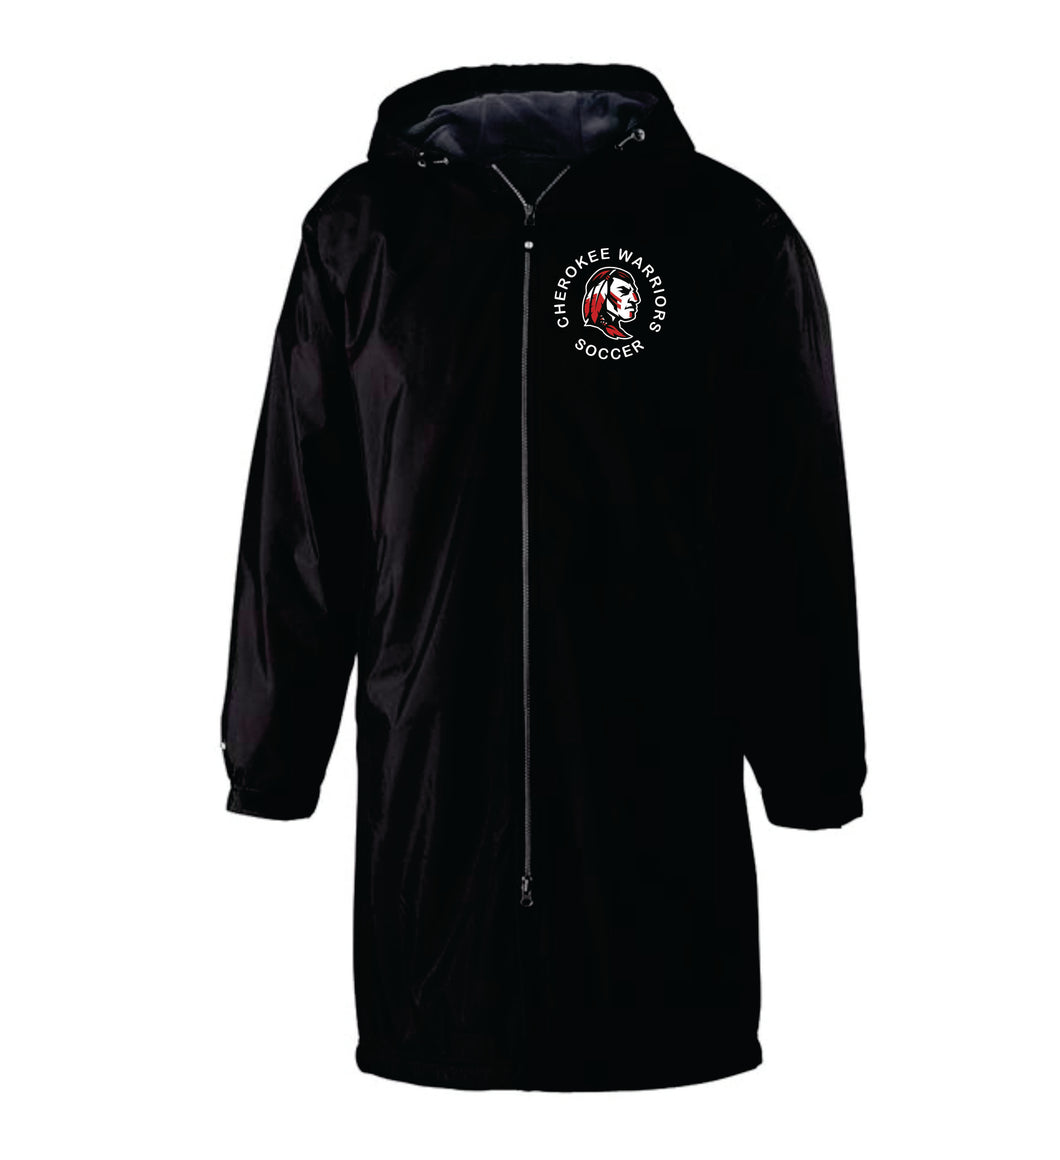 CHS-SOC-421-6 - Holloway Conquest Jacket - KNEE Length - Cherokee Warrior Soccer Logo